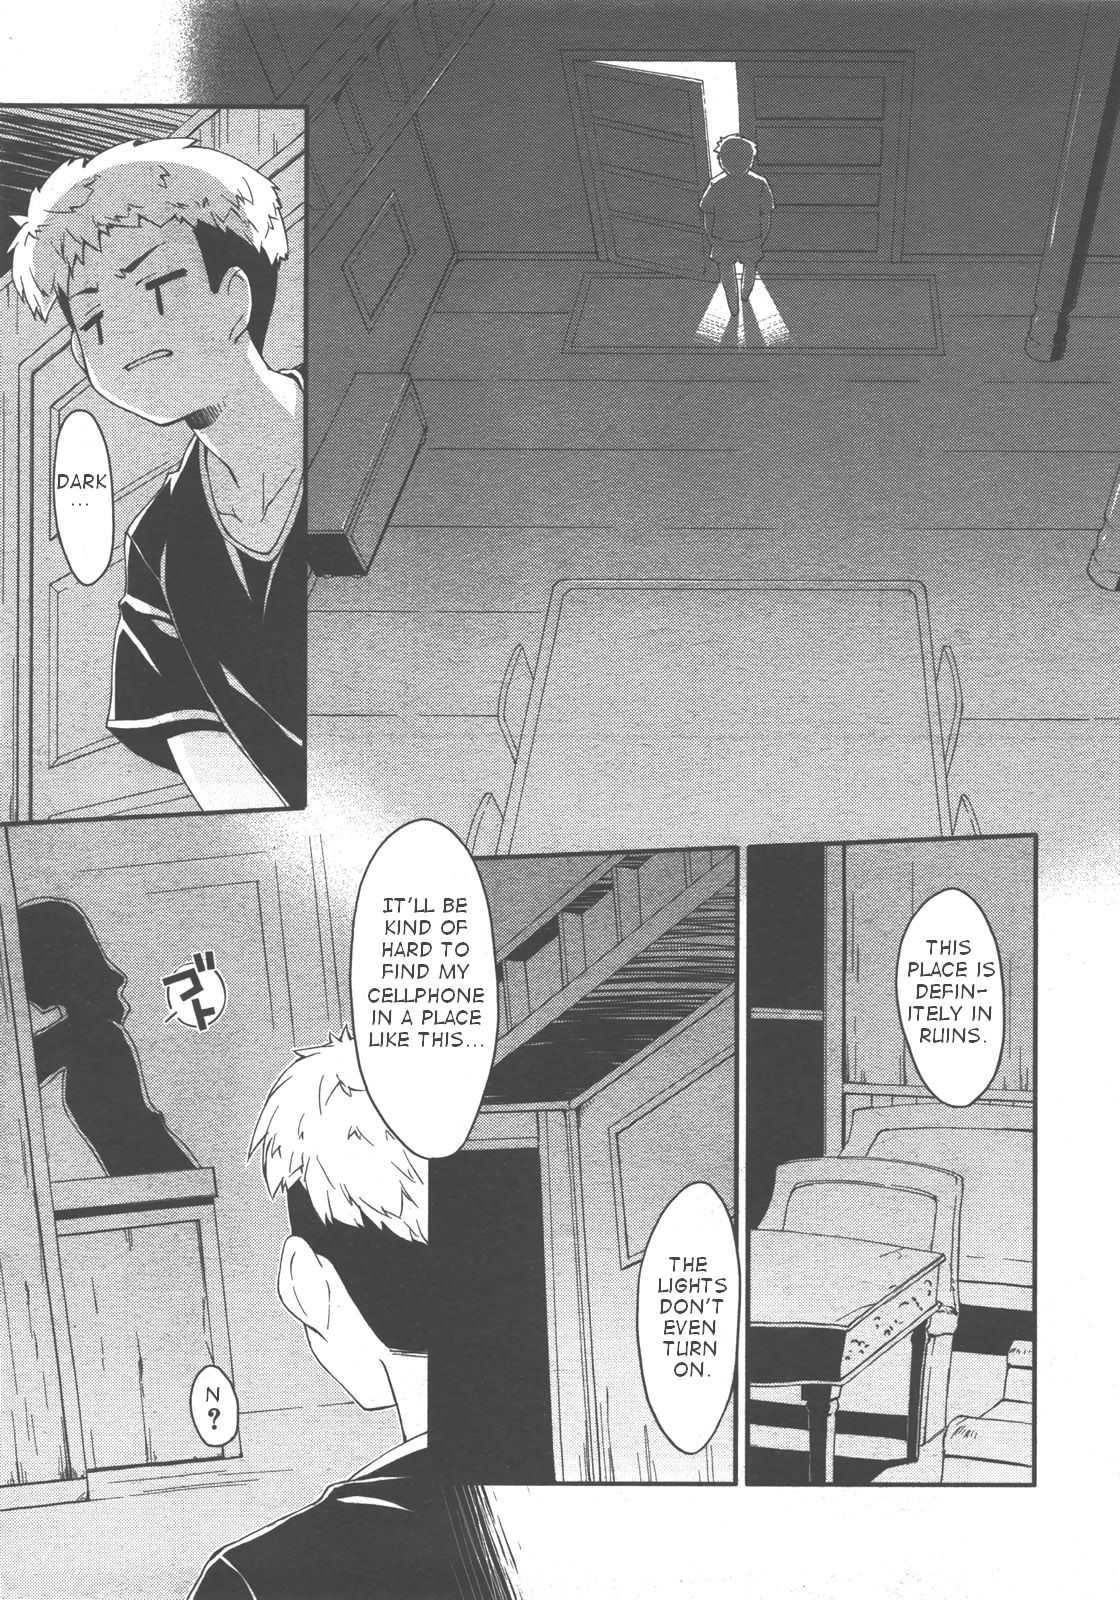 [Hoshizaki Hikaru]Ghost in the Residence [english] 